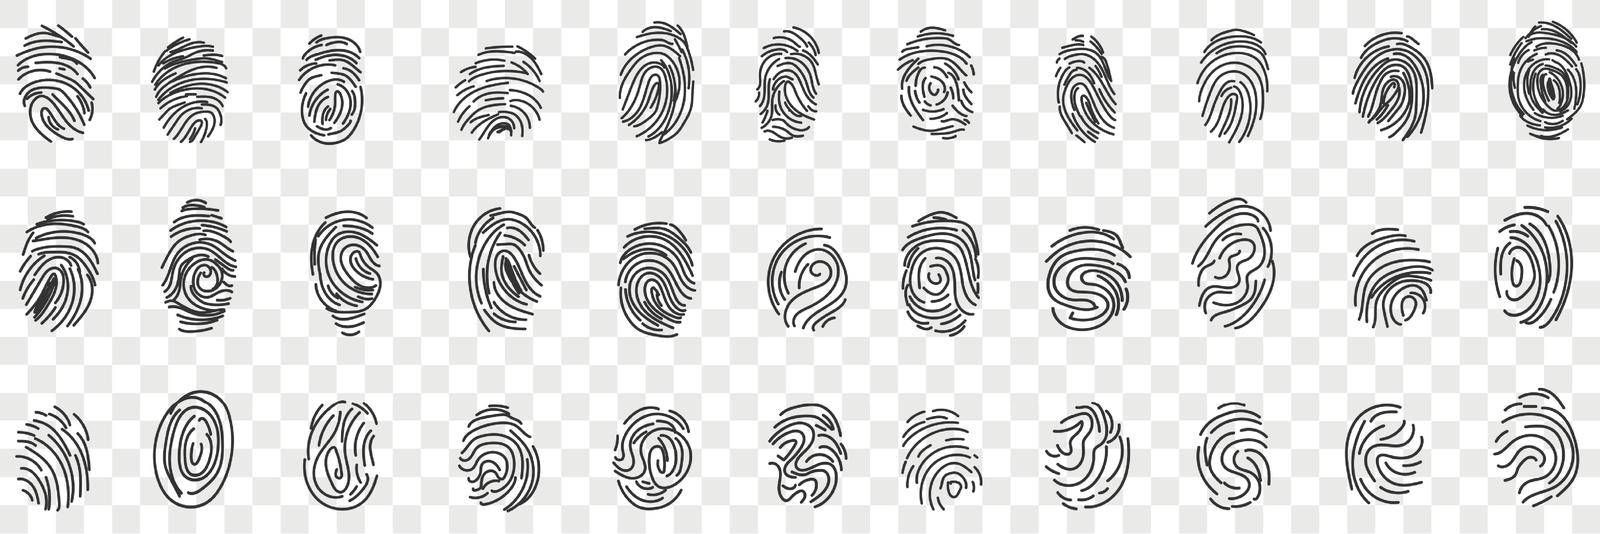 Fingerprints personal identity doodle set by Vasilyeva